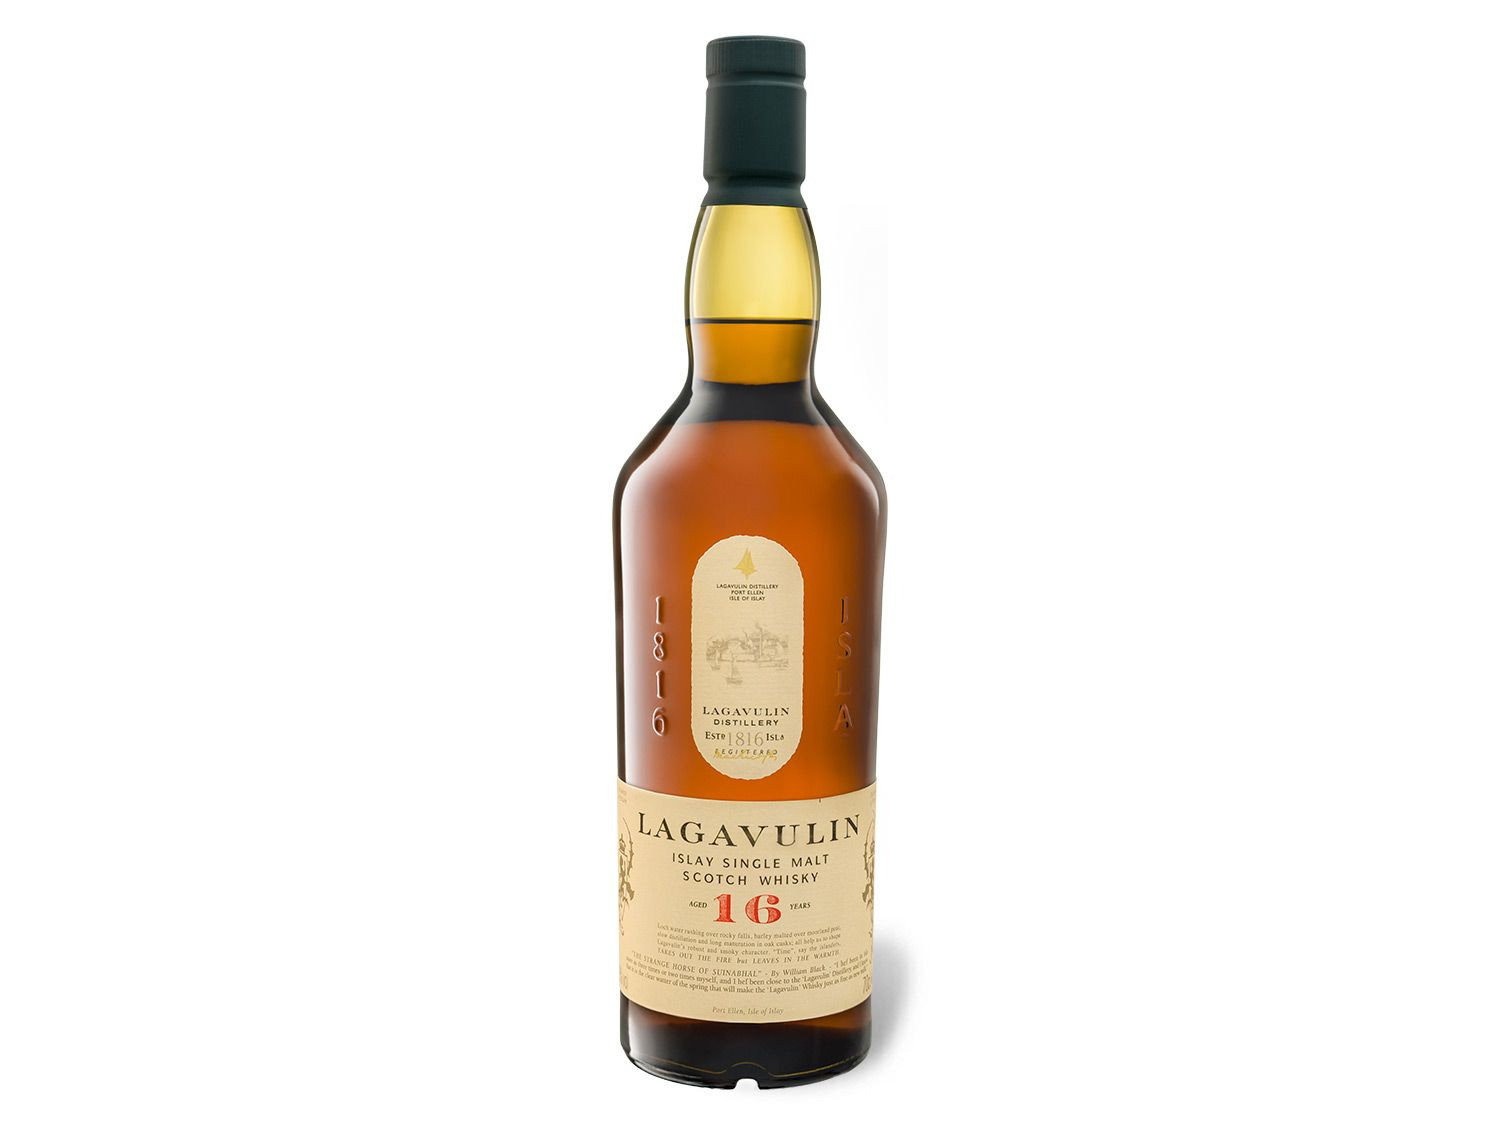 Lagavulin Islay Single Scotch 16 mit… Whisky Malt Jahre